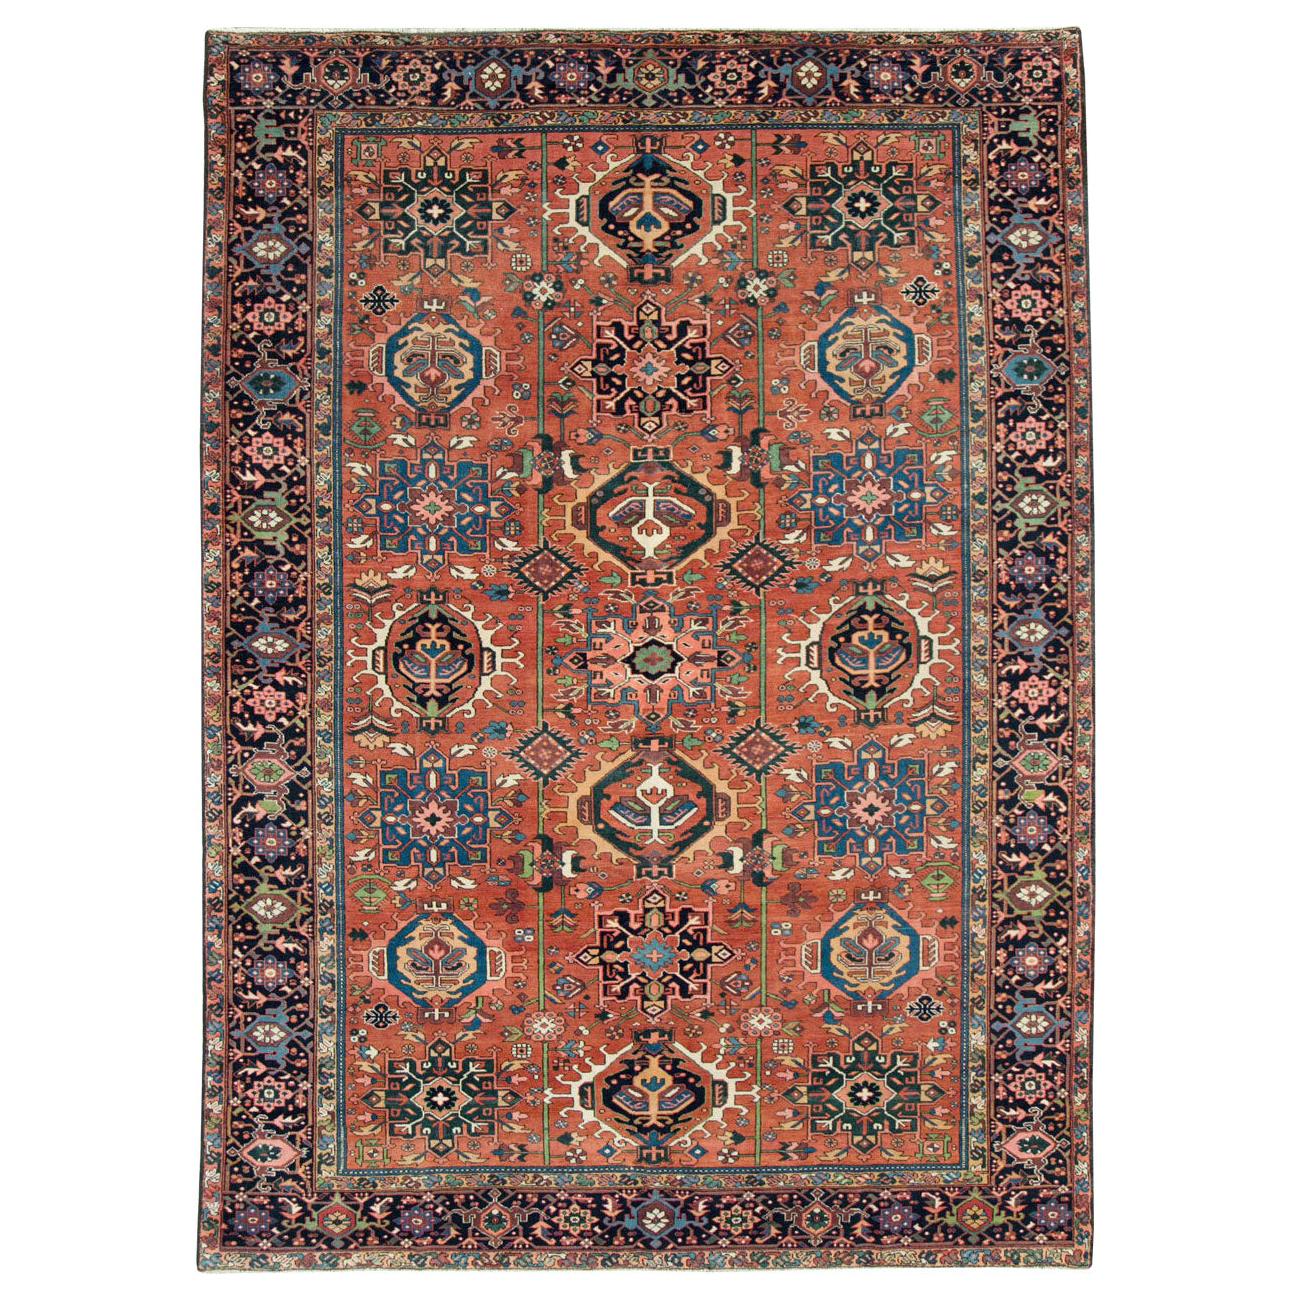 Early 20th Century Handmade Persian Karajeh Room Size Carpet